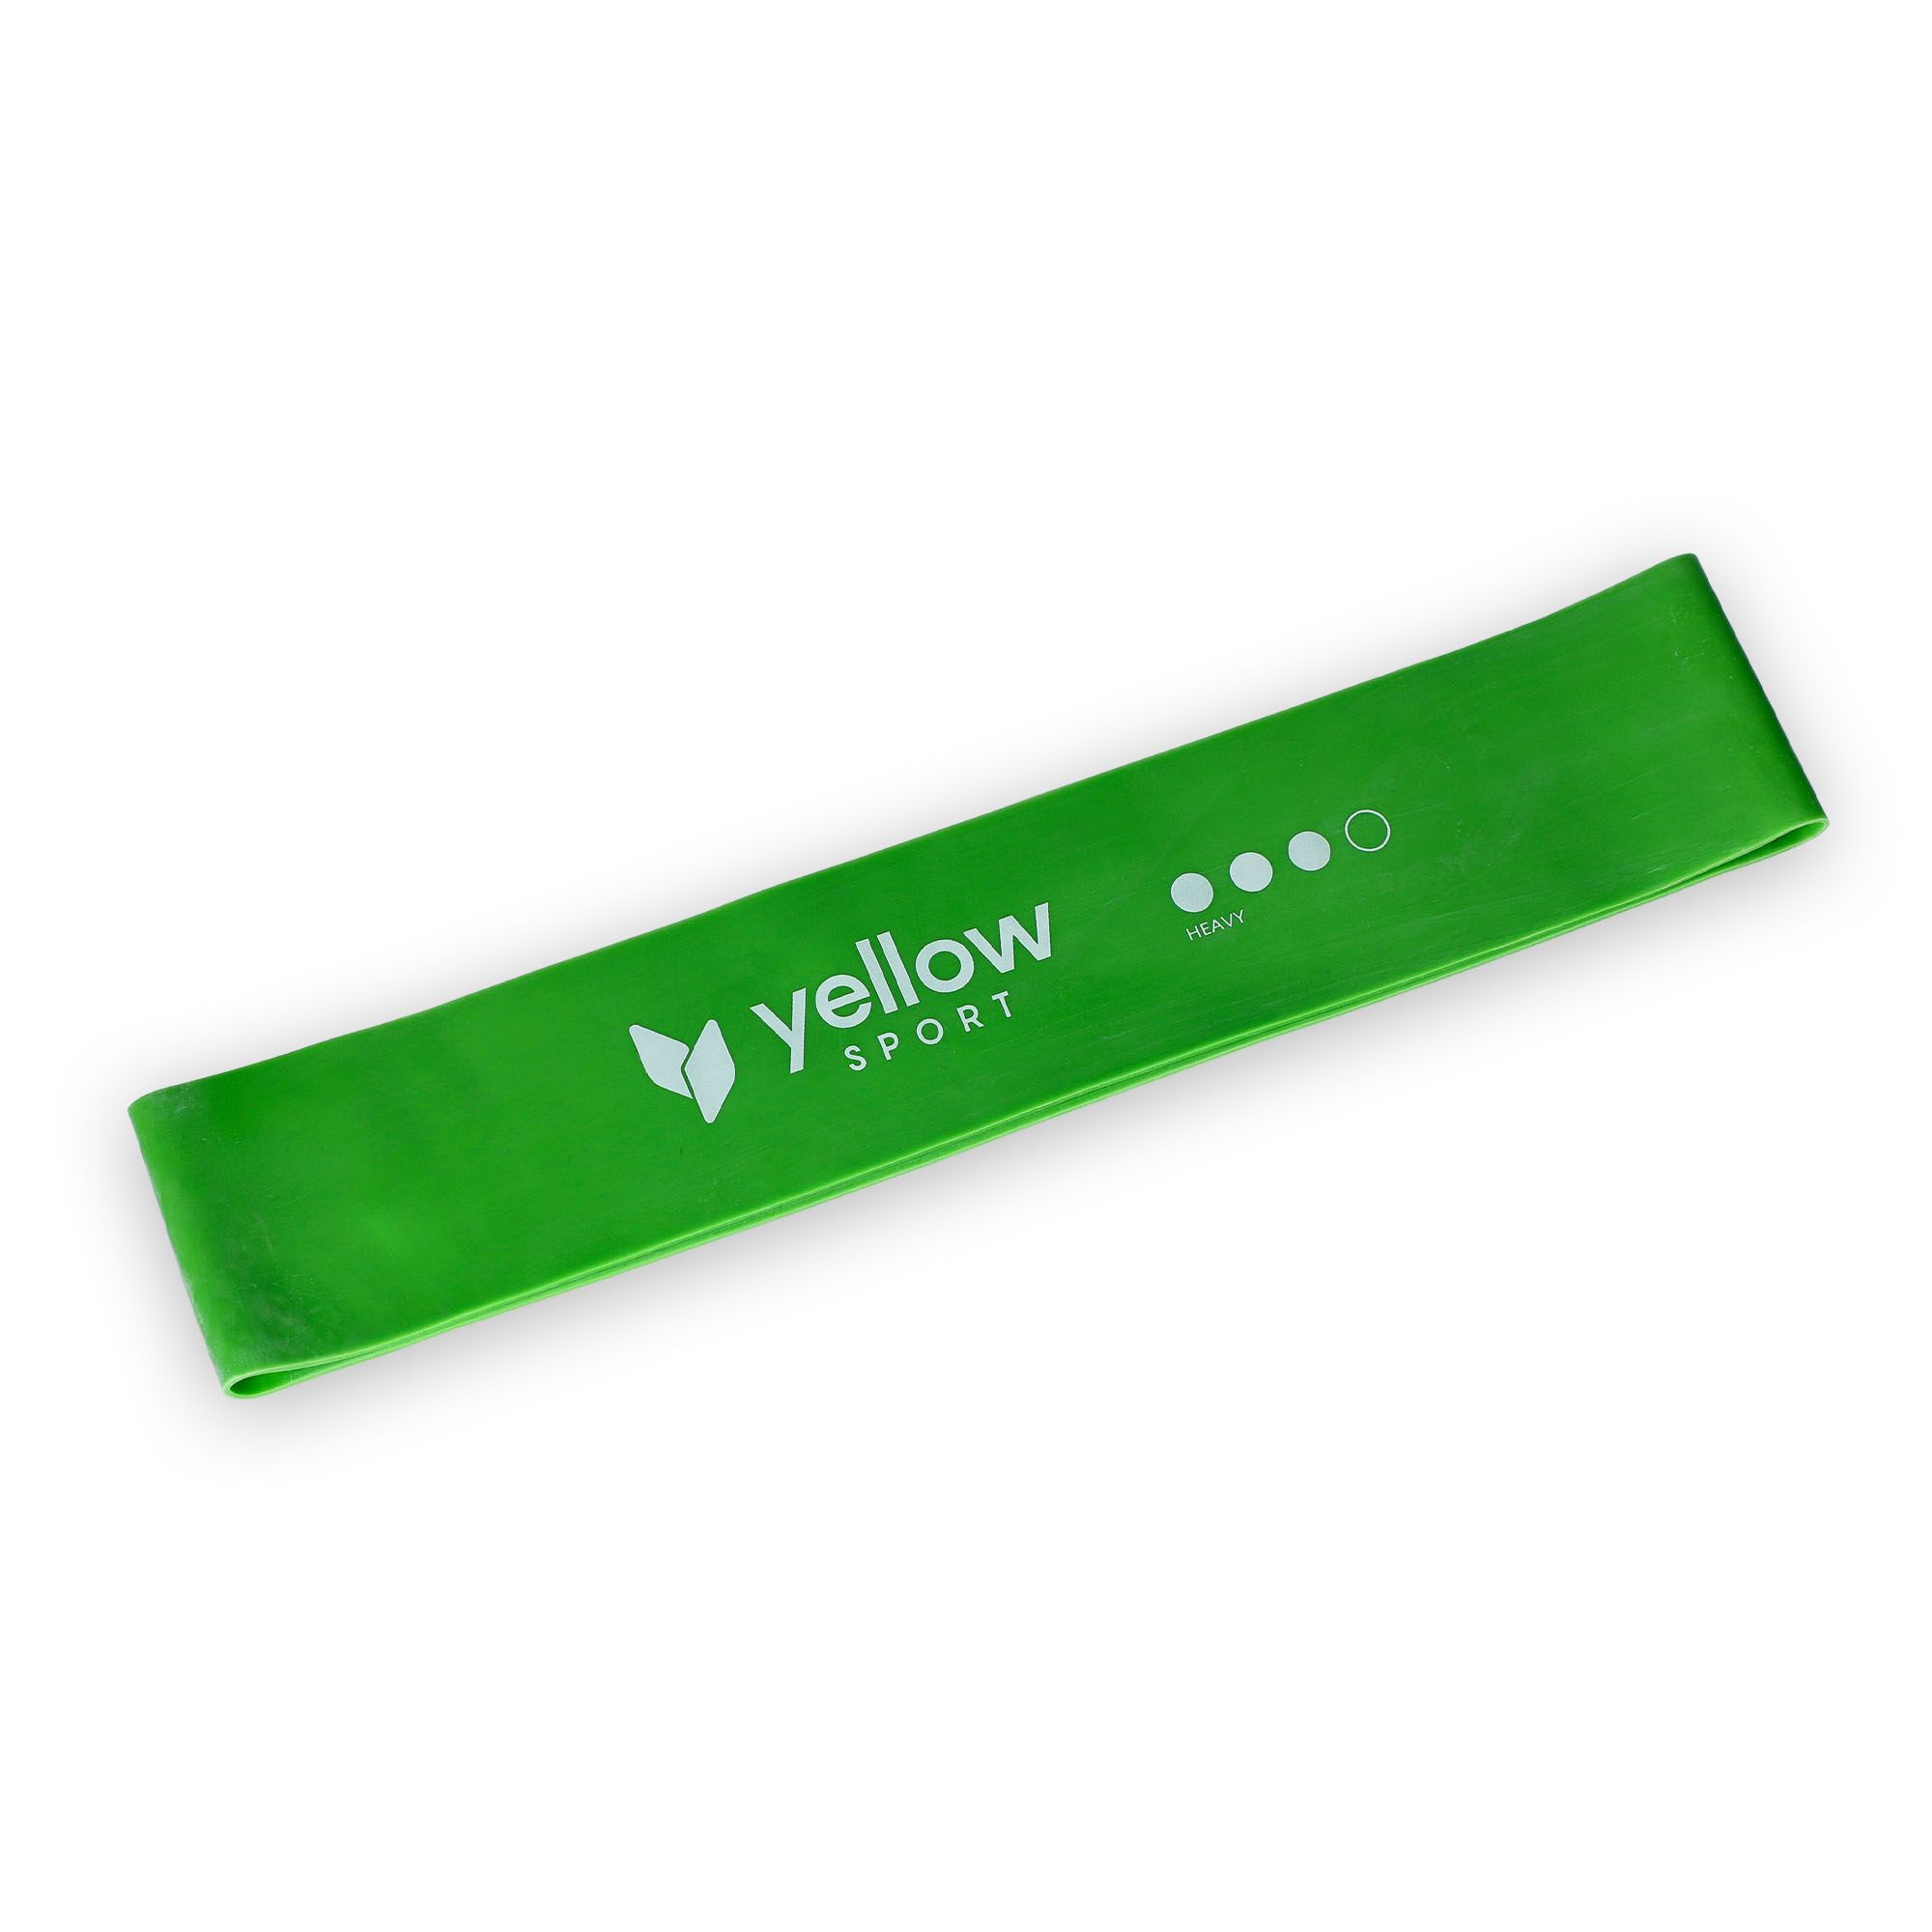 Guma do ćwiczeń yellowLOOP Band - zielona, opór 10-15 kg